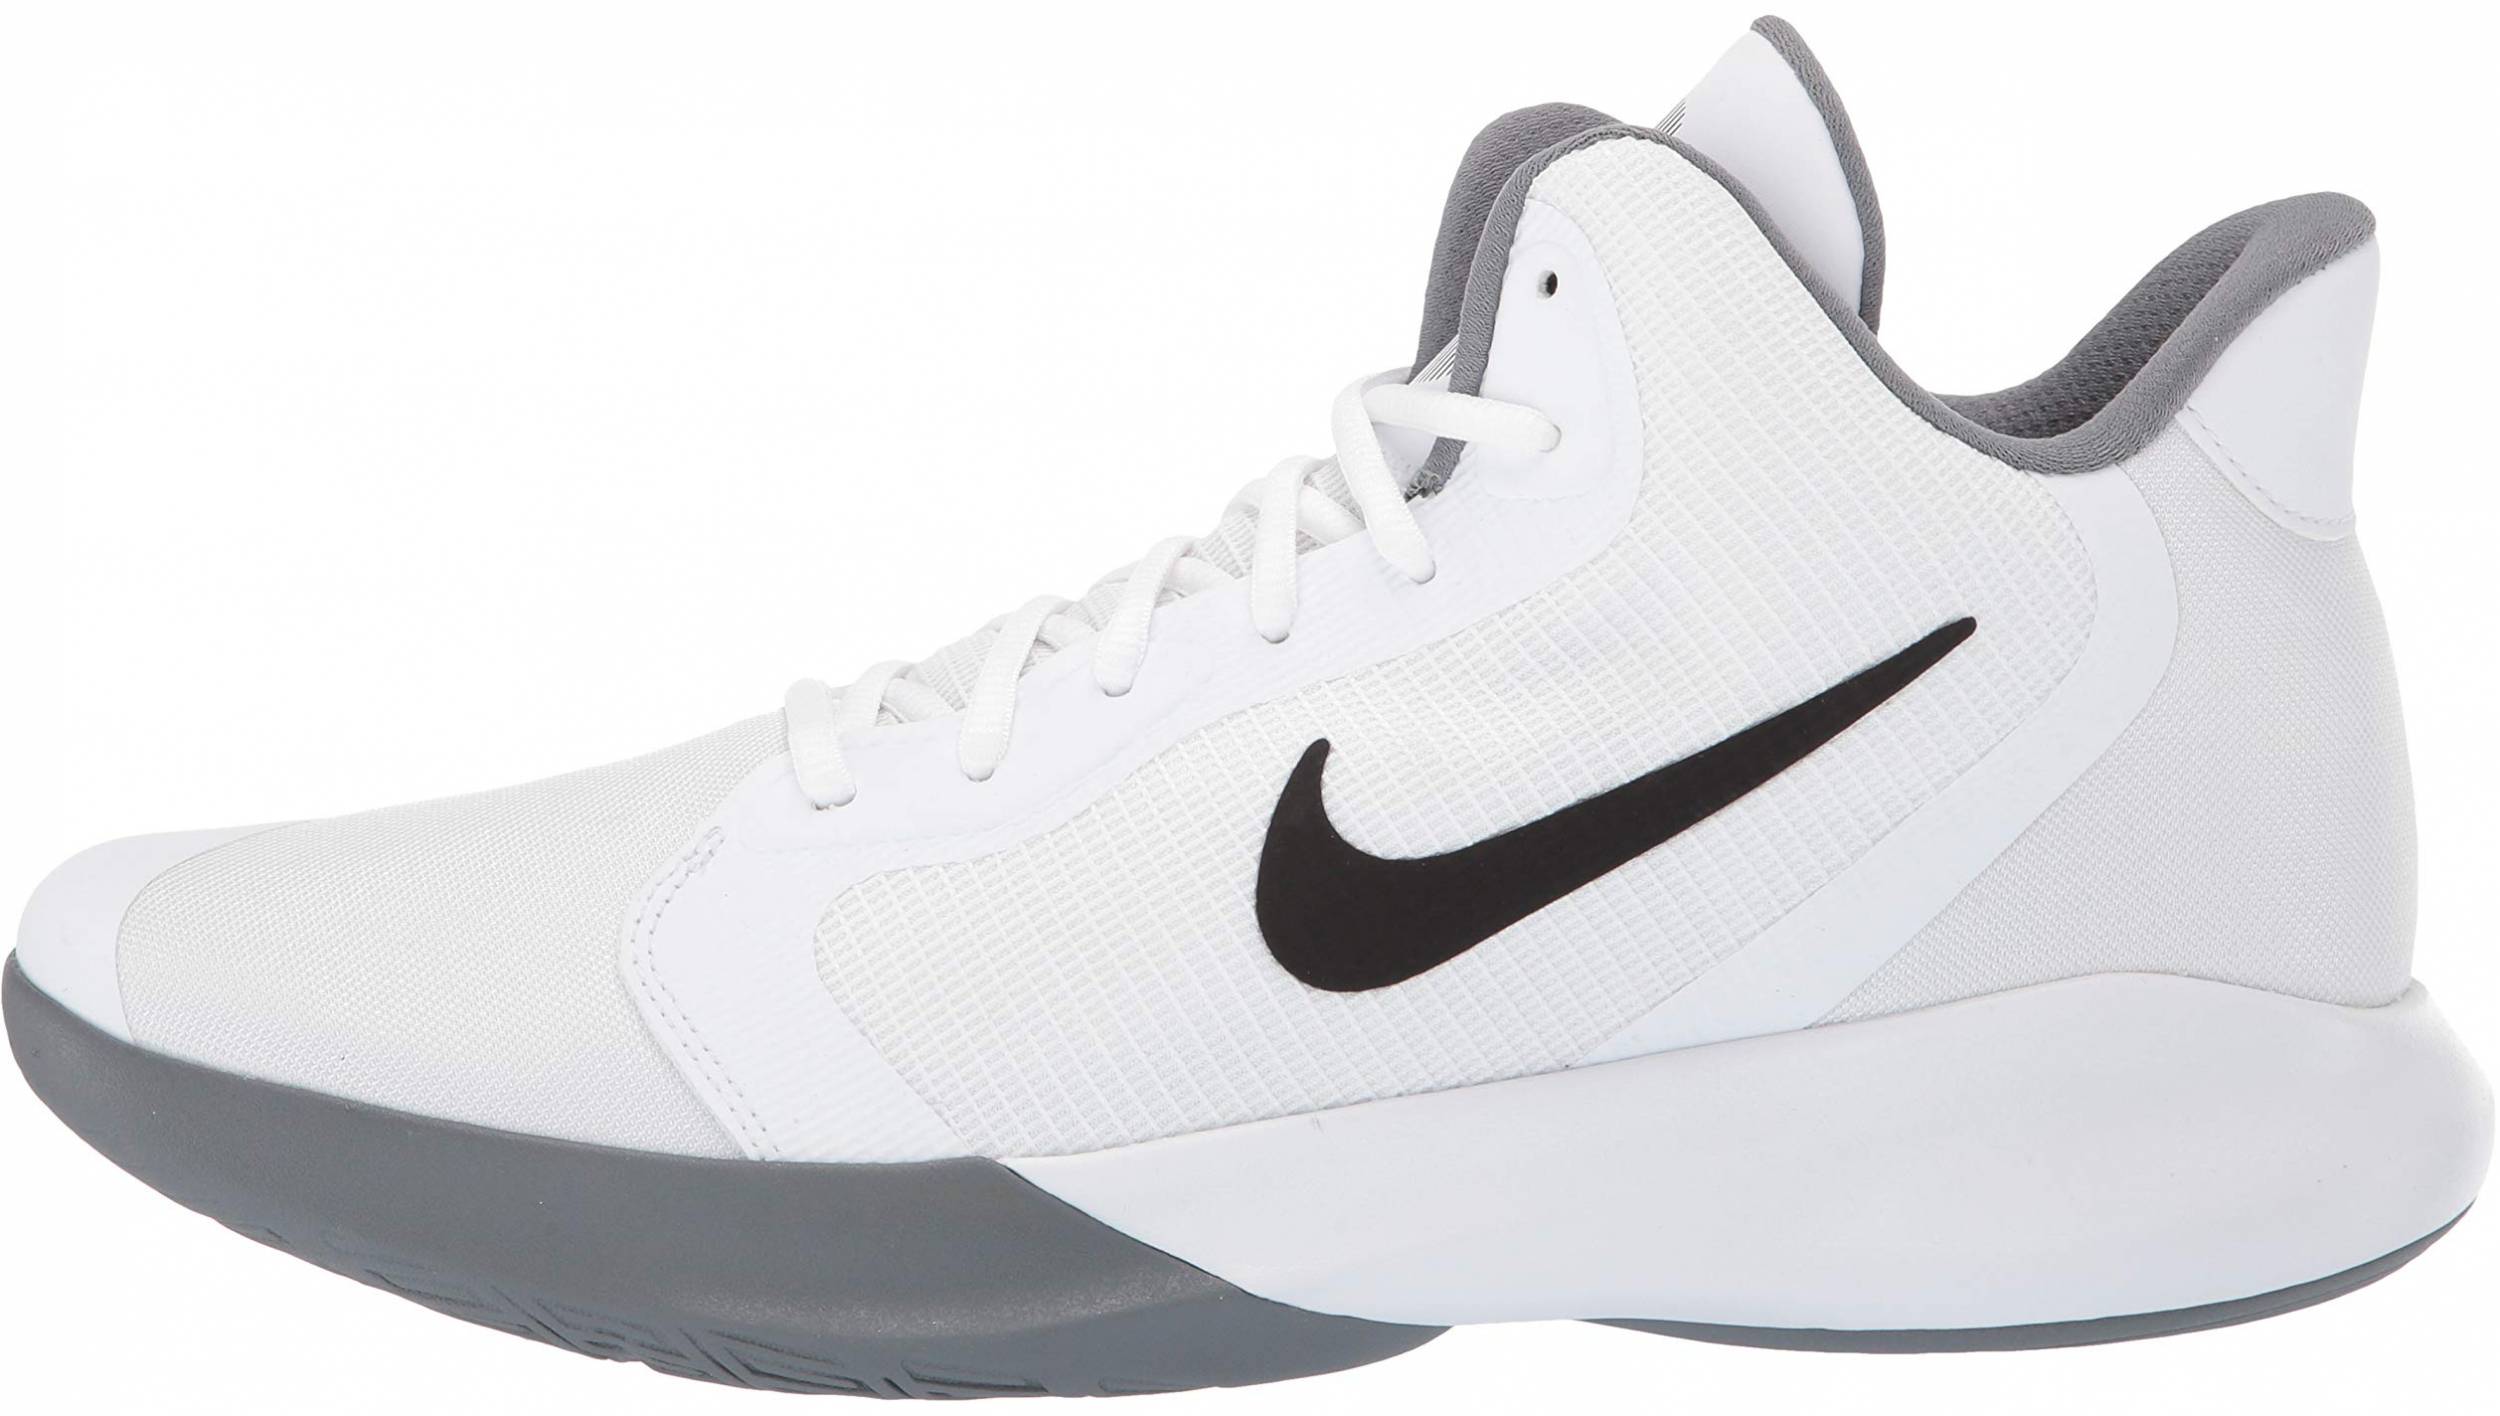 Save 31% on White Nike Basketball Shoes 